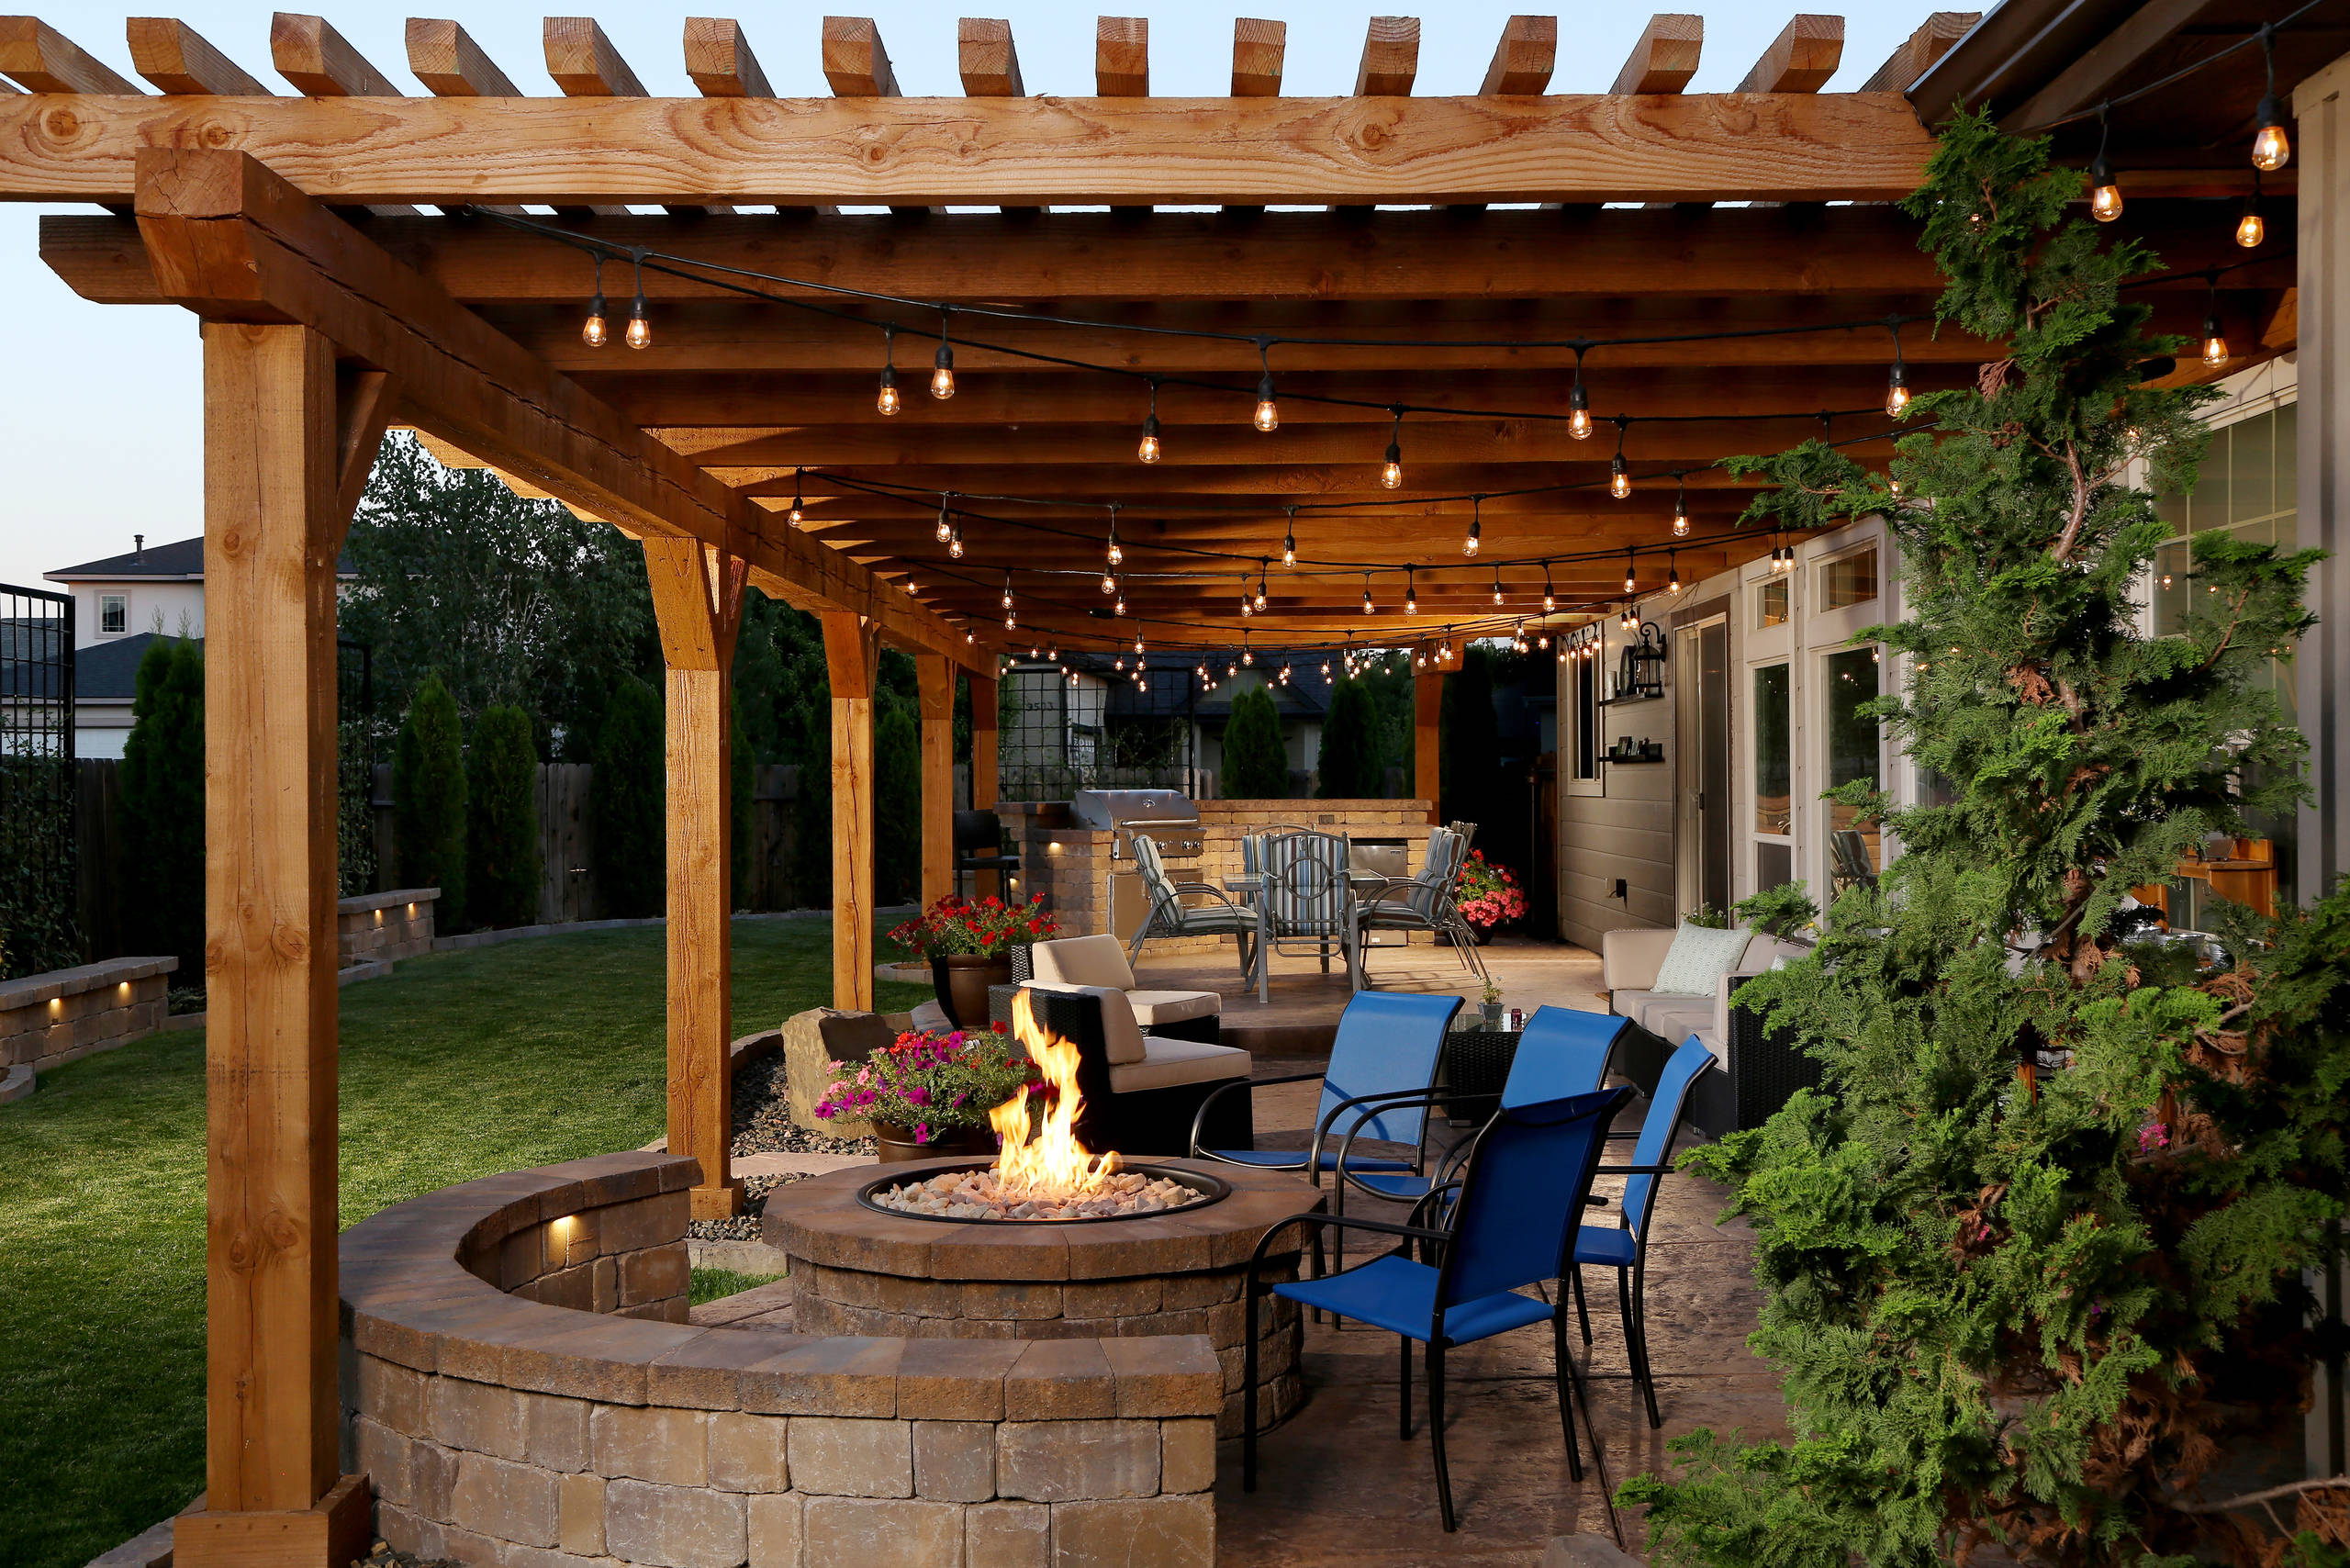 75 Beautiful Backyard Patio Design Ideas Pictures Houzz